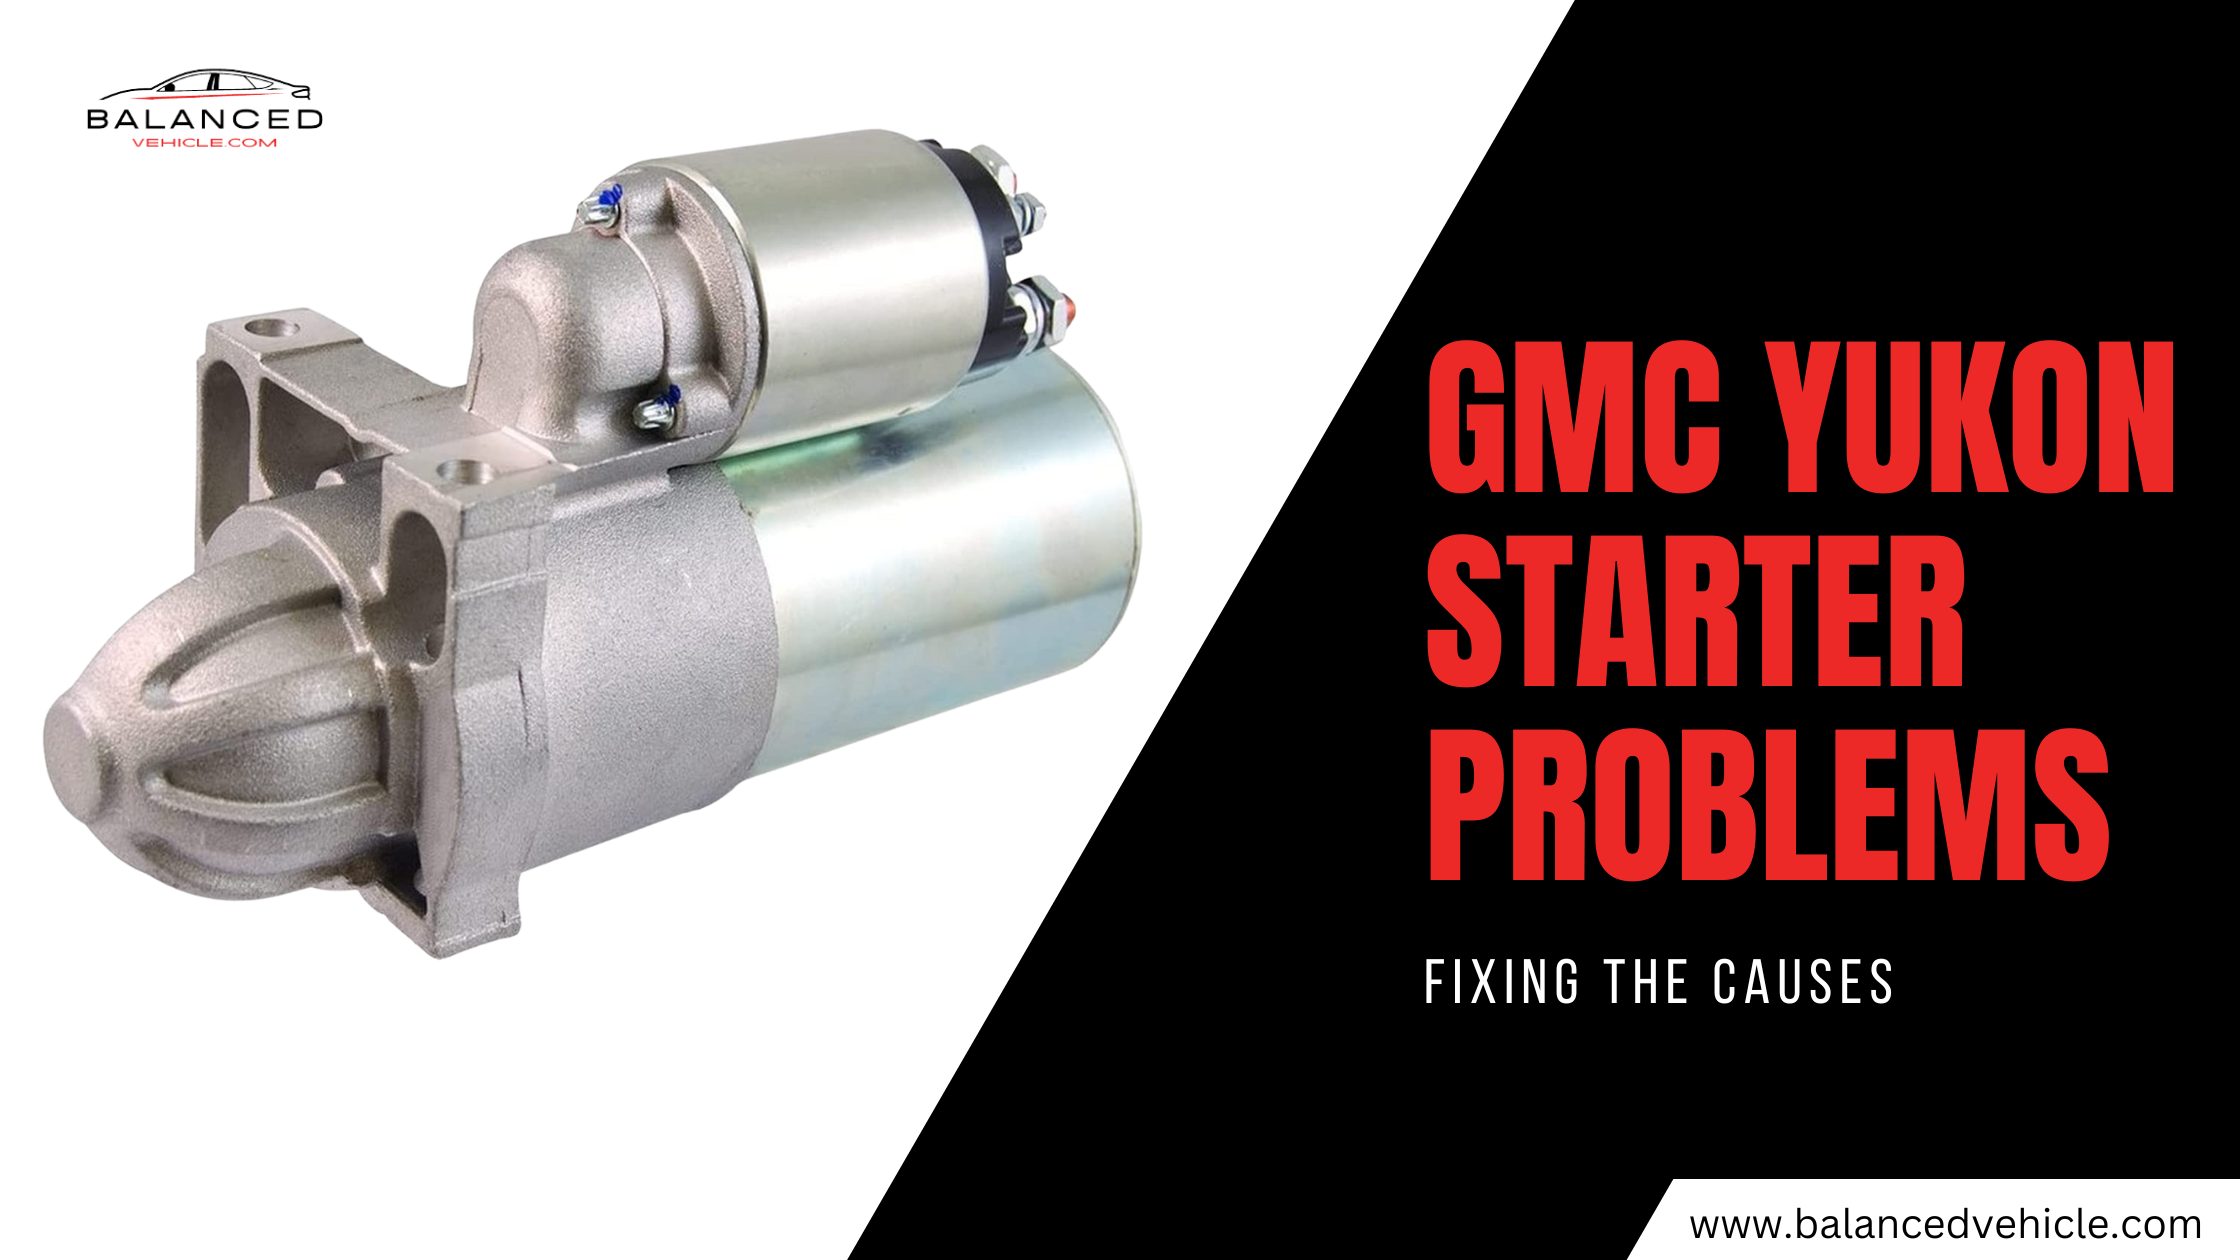 Fixing the GMC Yukon Starter Problems